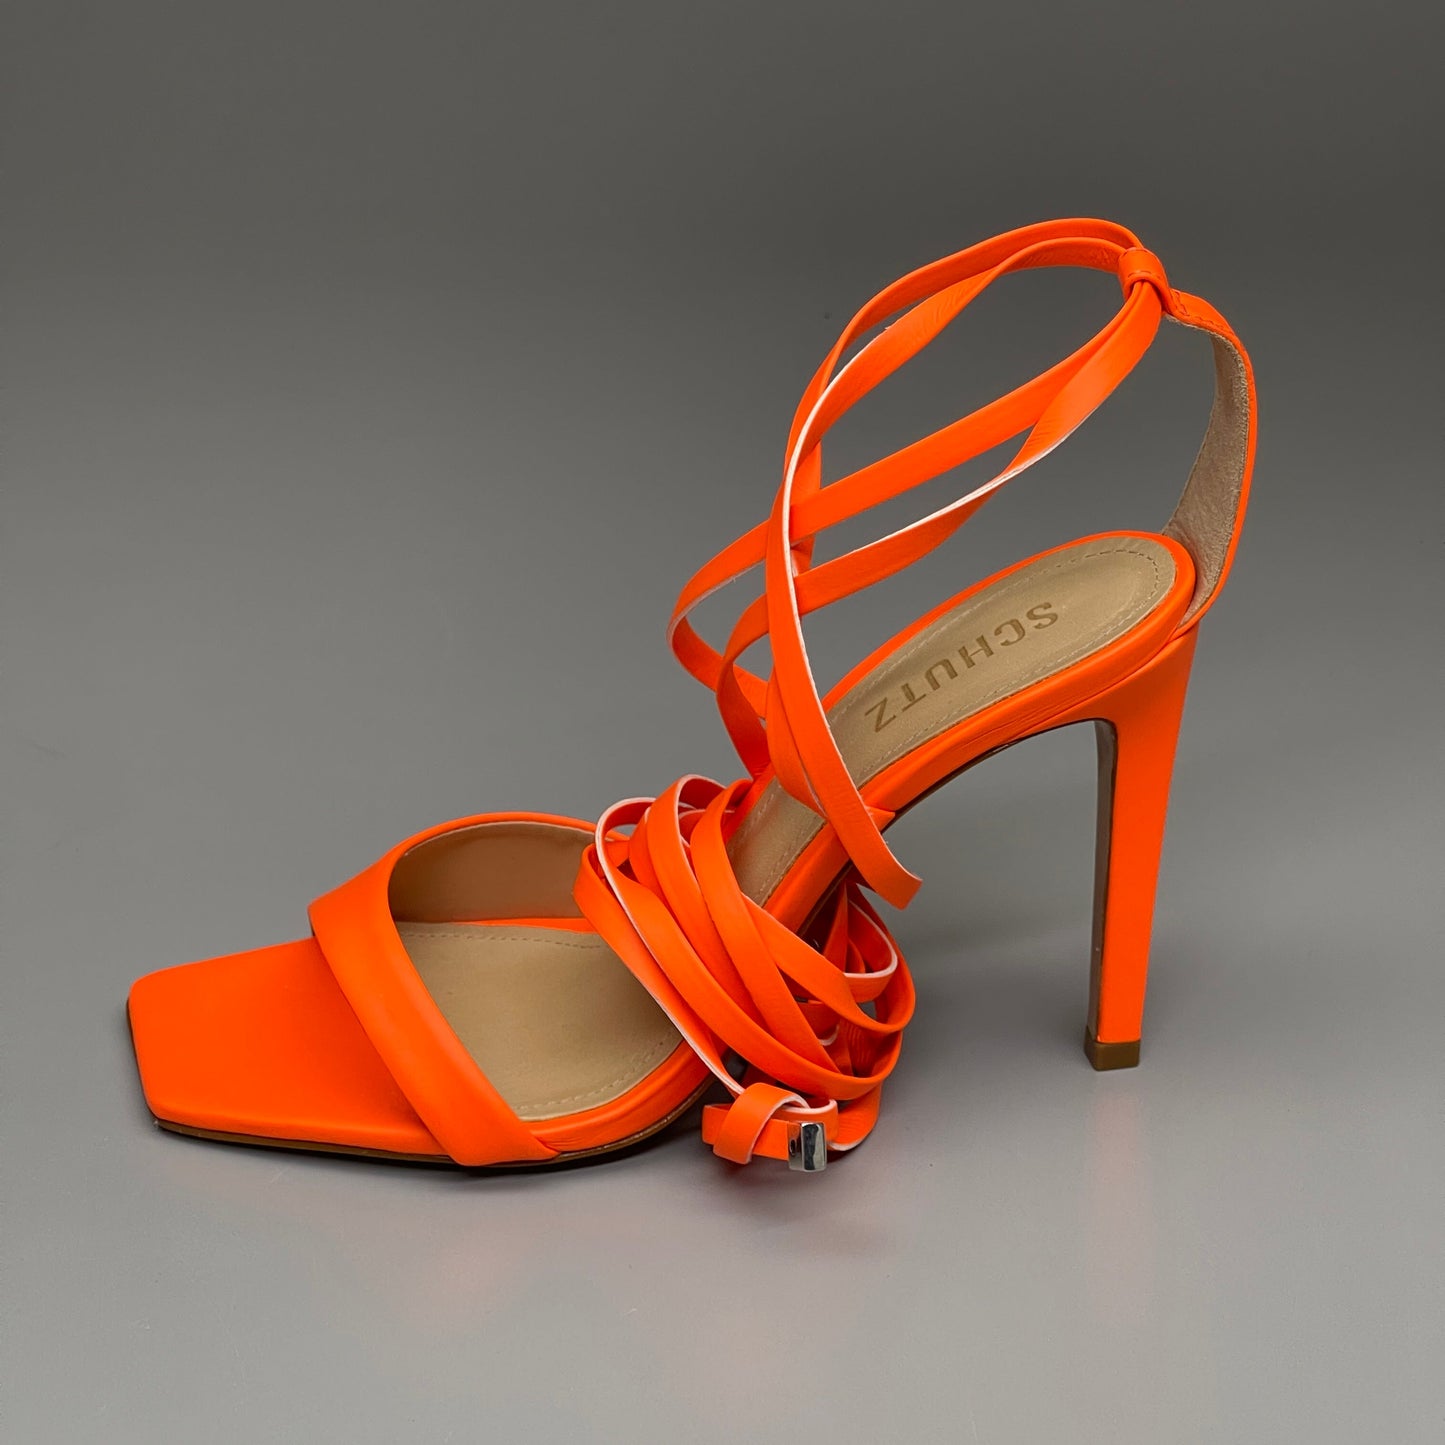 SCHUTZ Bryce Ankle Tie Women's High Heel Leather Strappy Sandal Acid Orange Sz 7.5 (New)